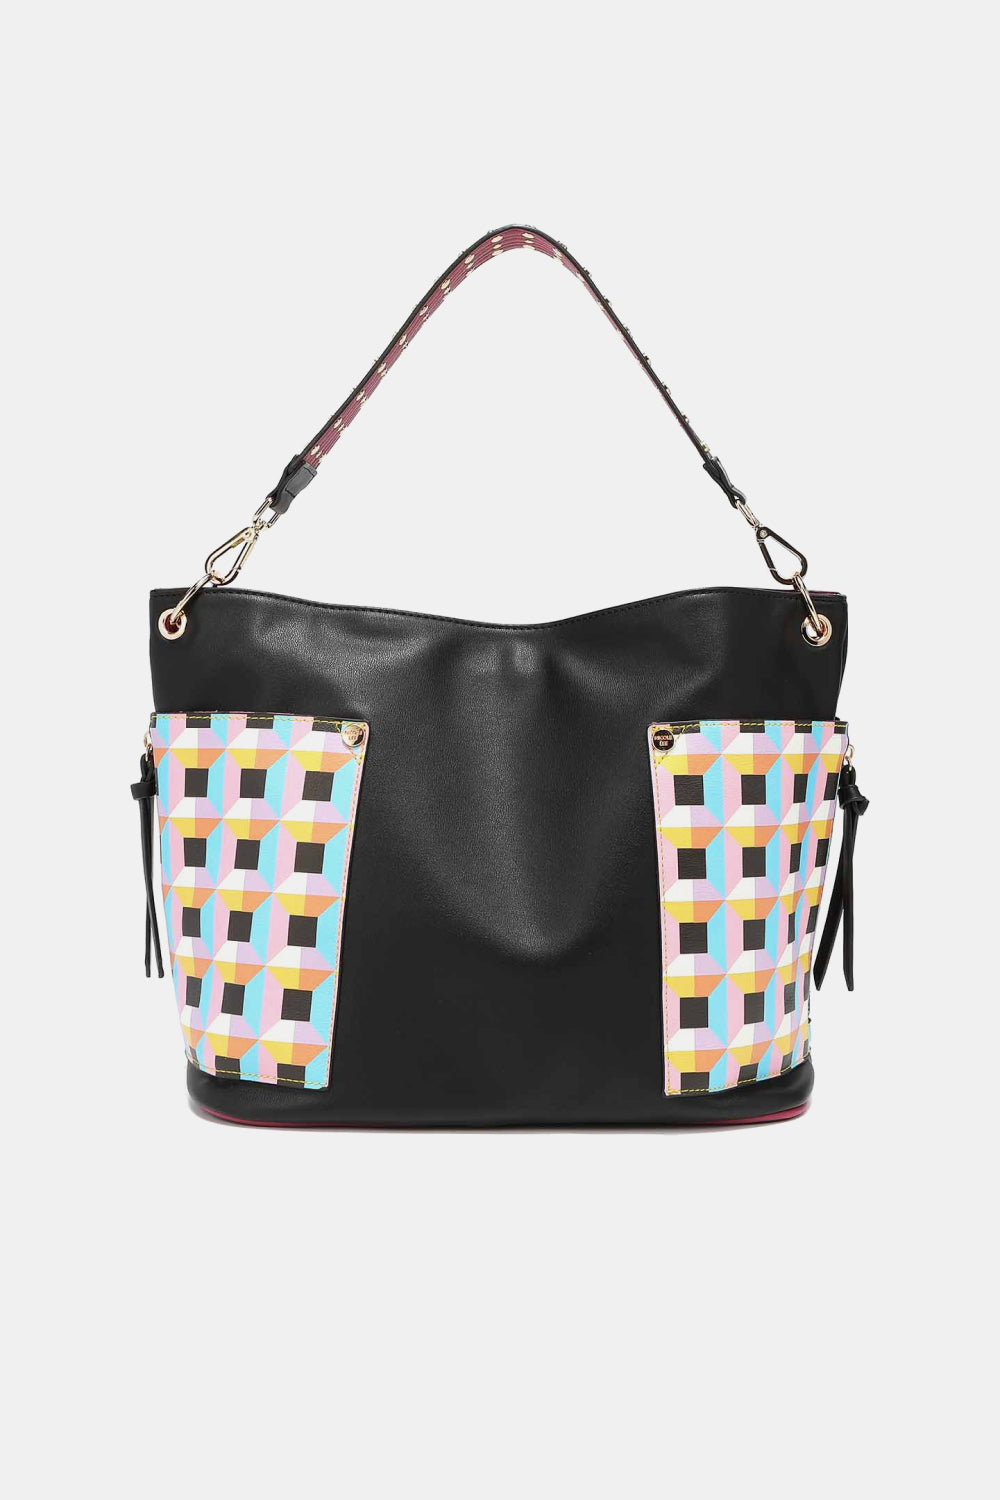 Nicole Lee USA Quihn 3-Piece Handbag Set - TiffanyzKlozet